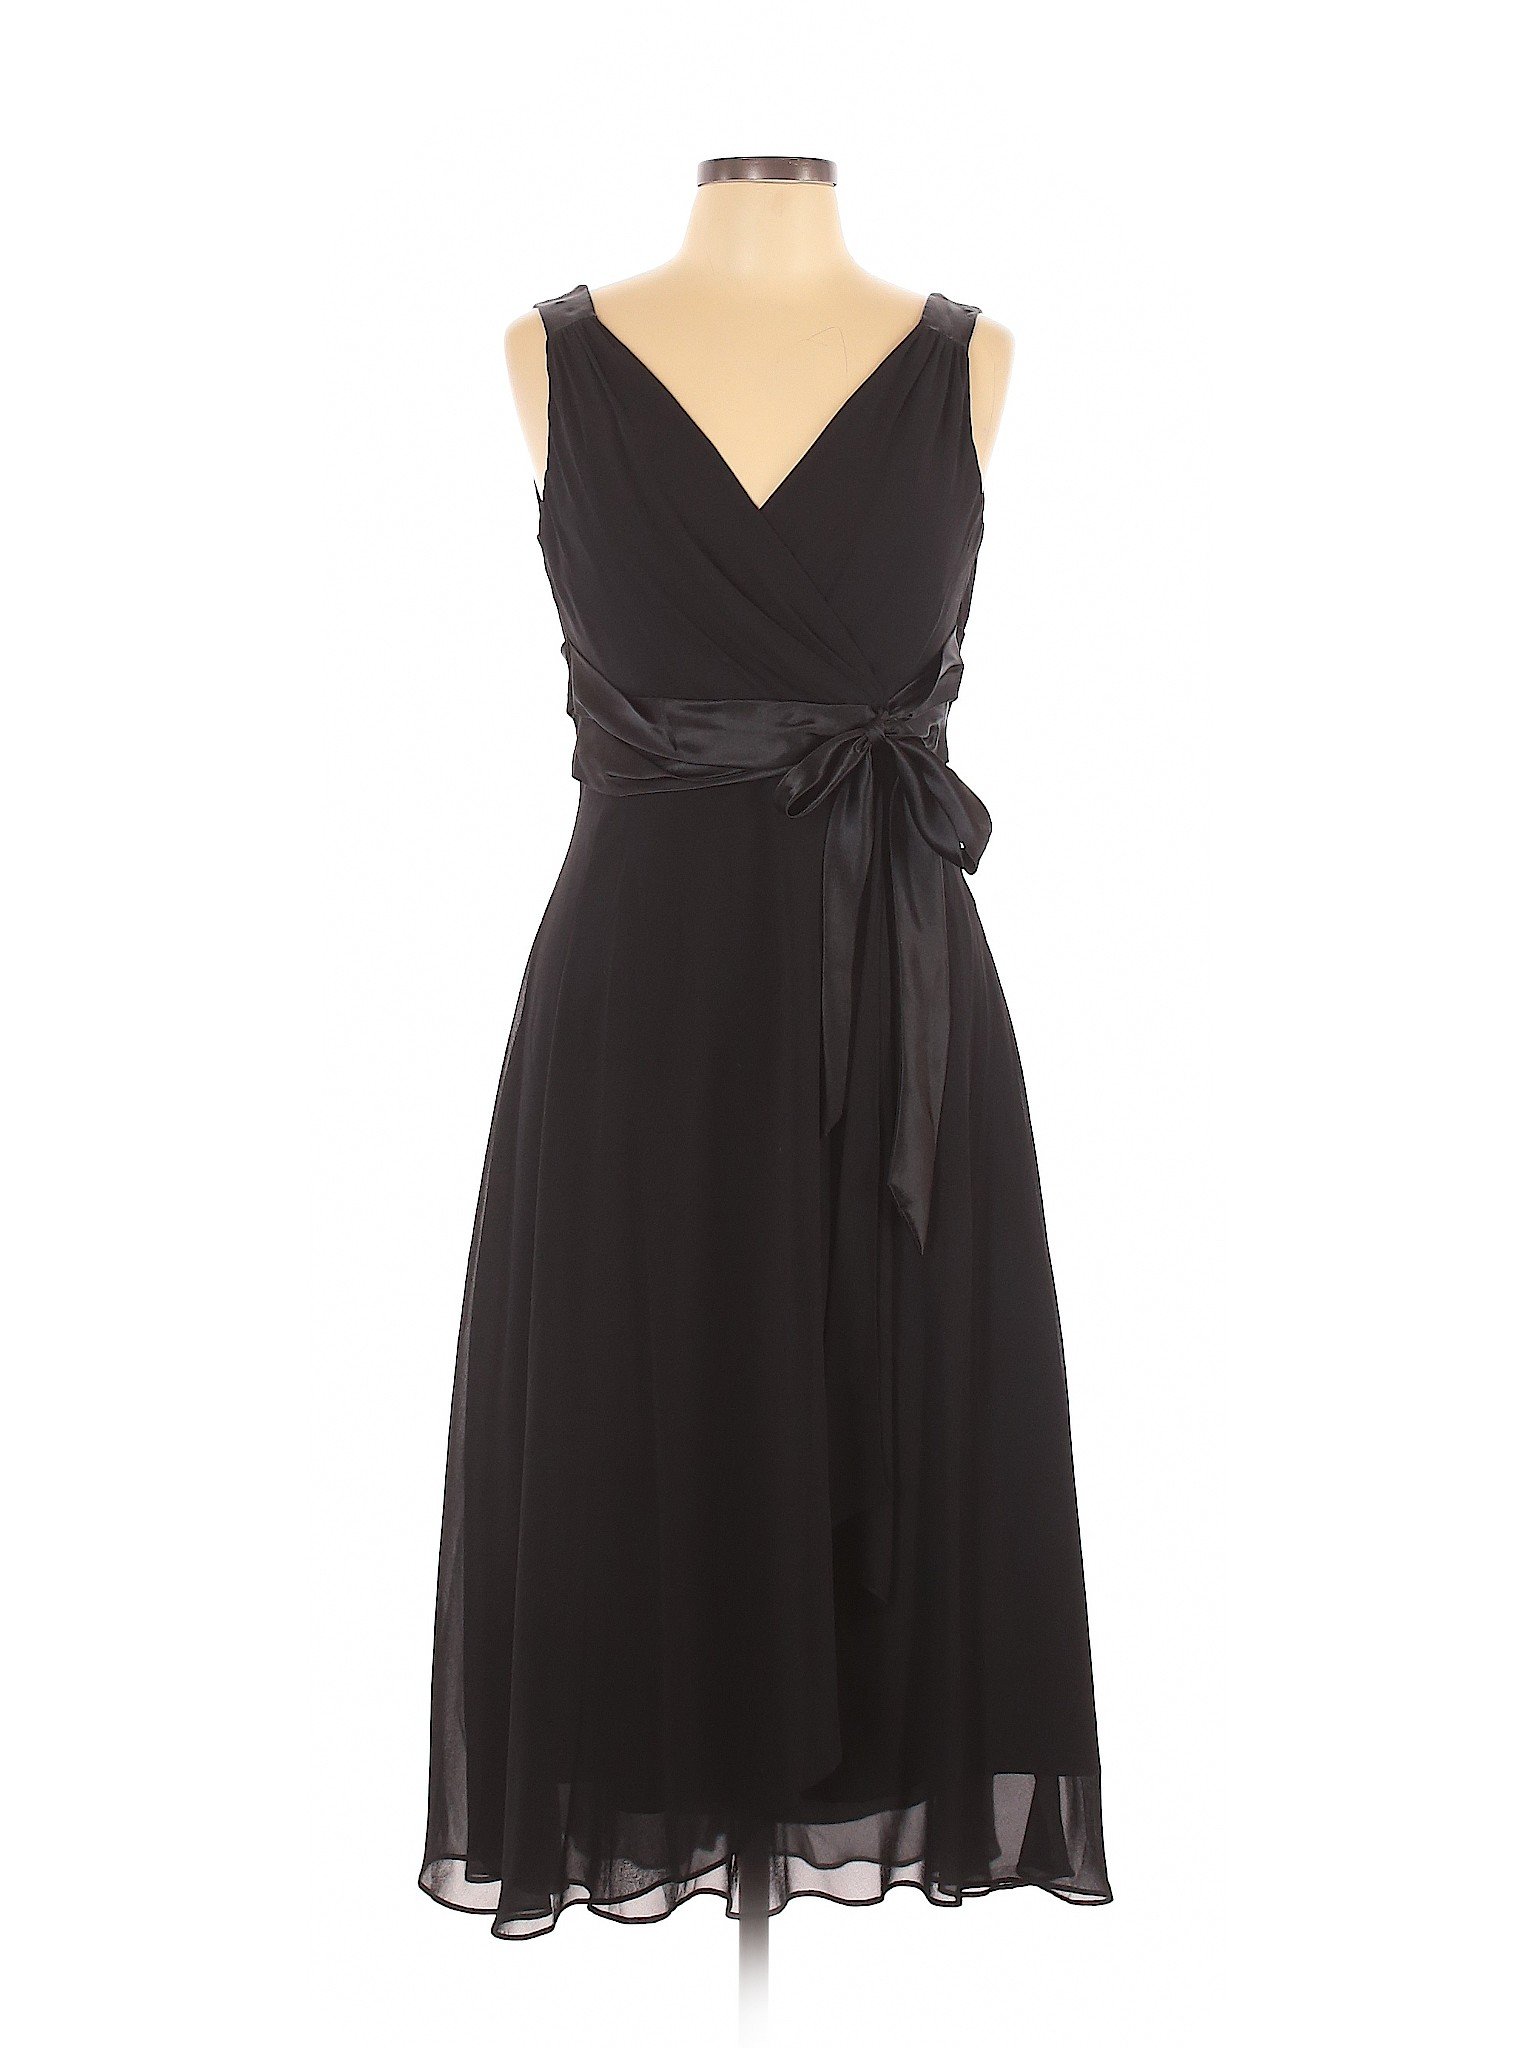 Evan Picone Women Black Cocktail Dress 12 | eBay